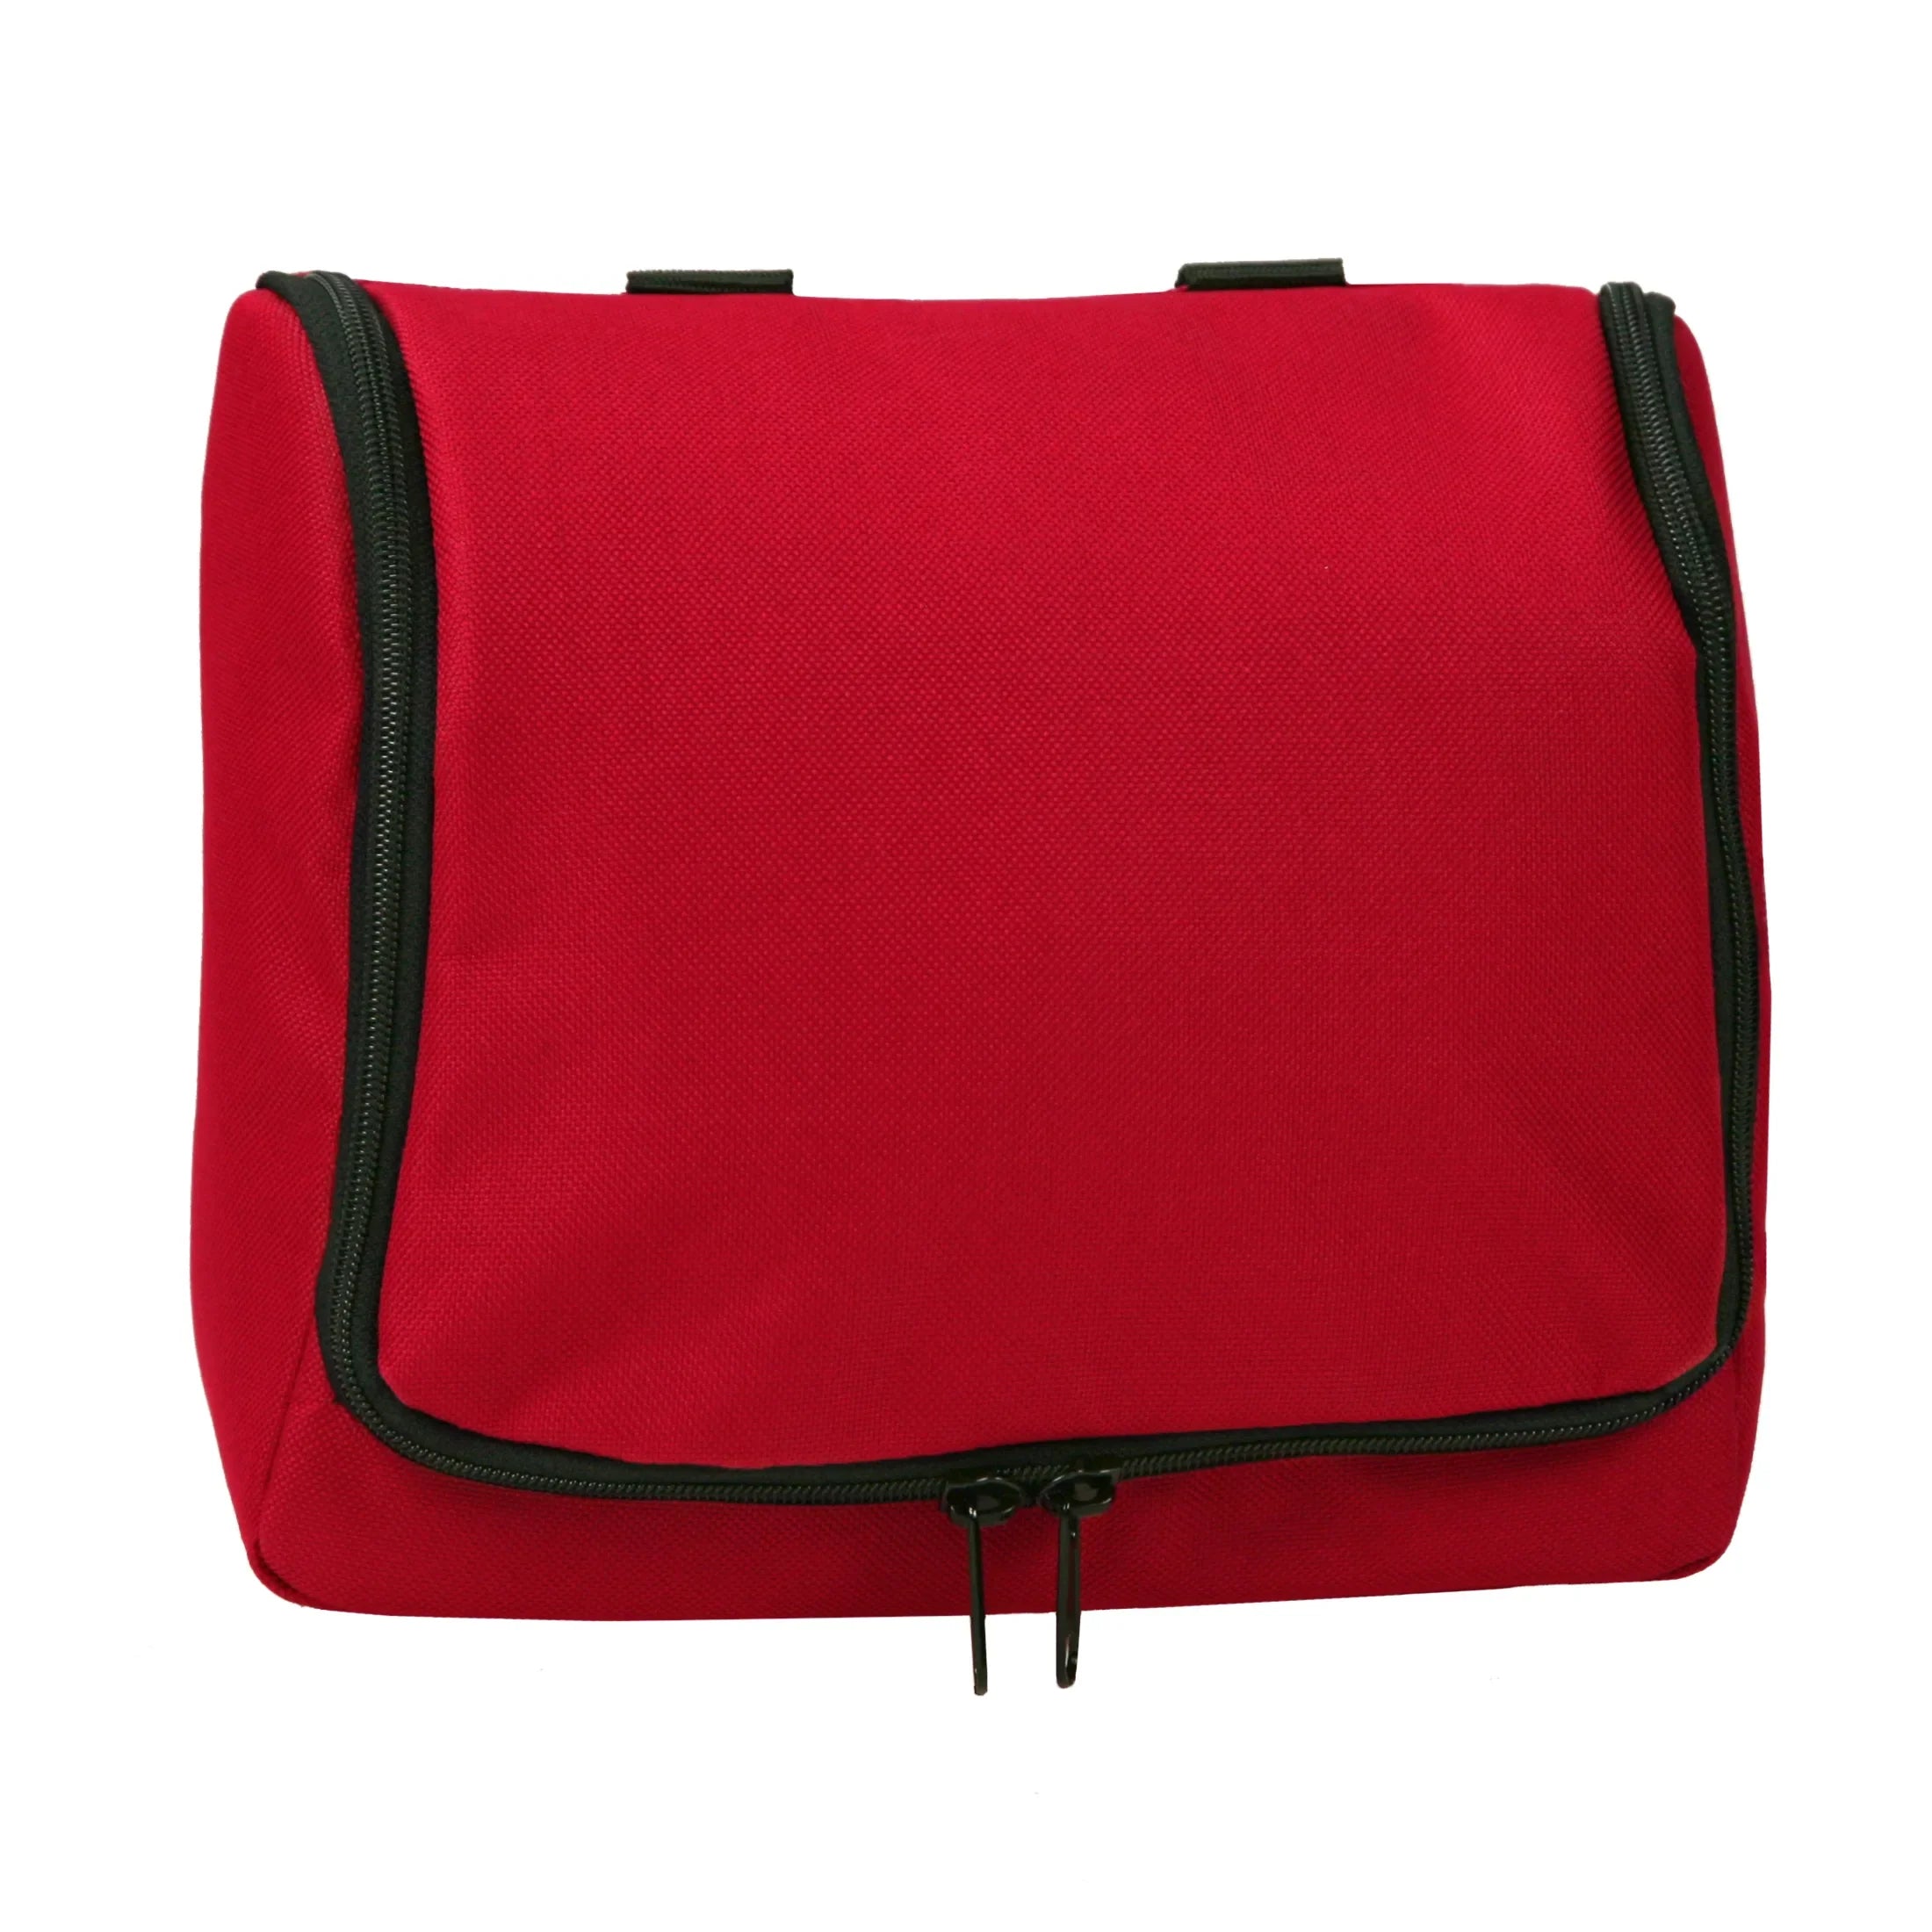 Reisenthel Travelling Toiletbag hanging toiletry bag - red